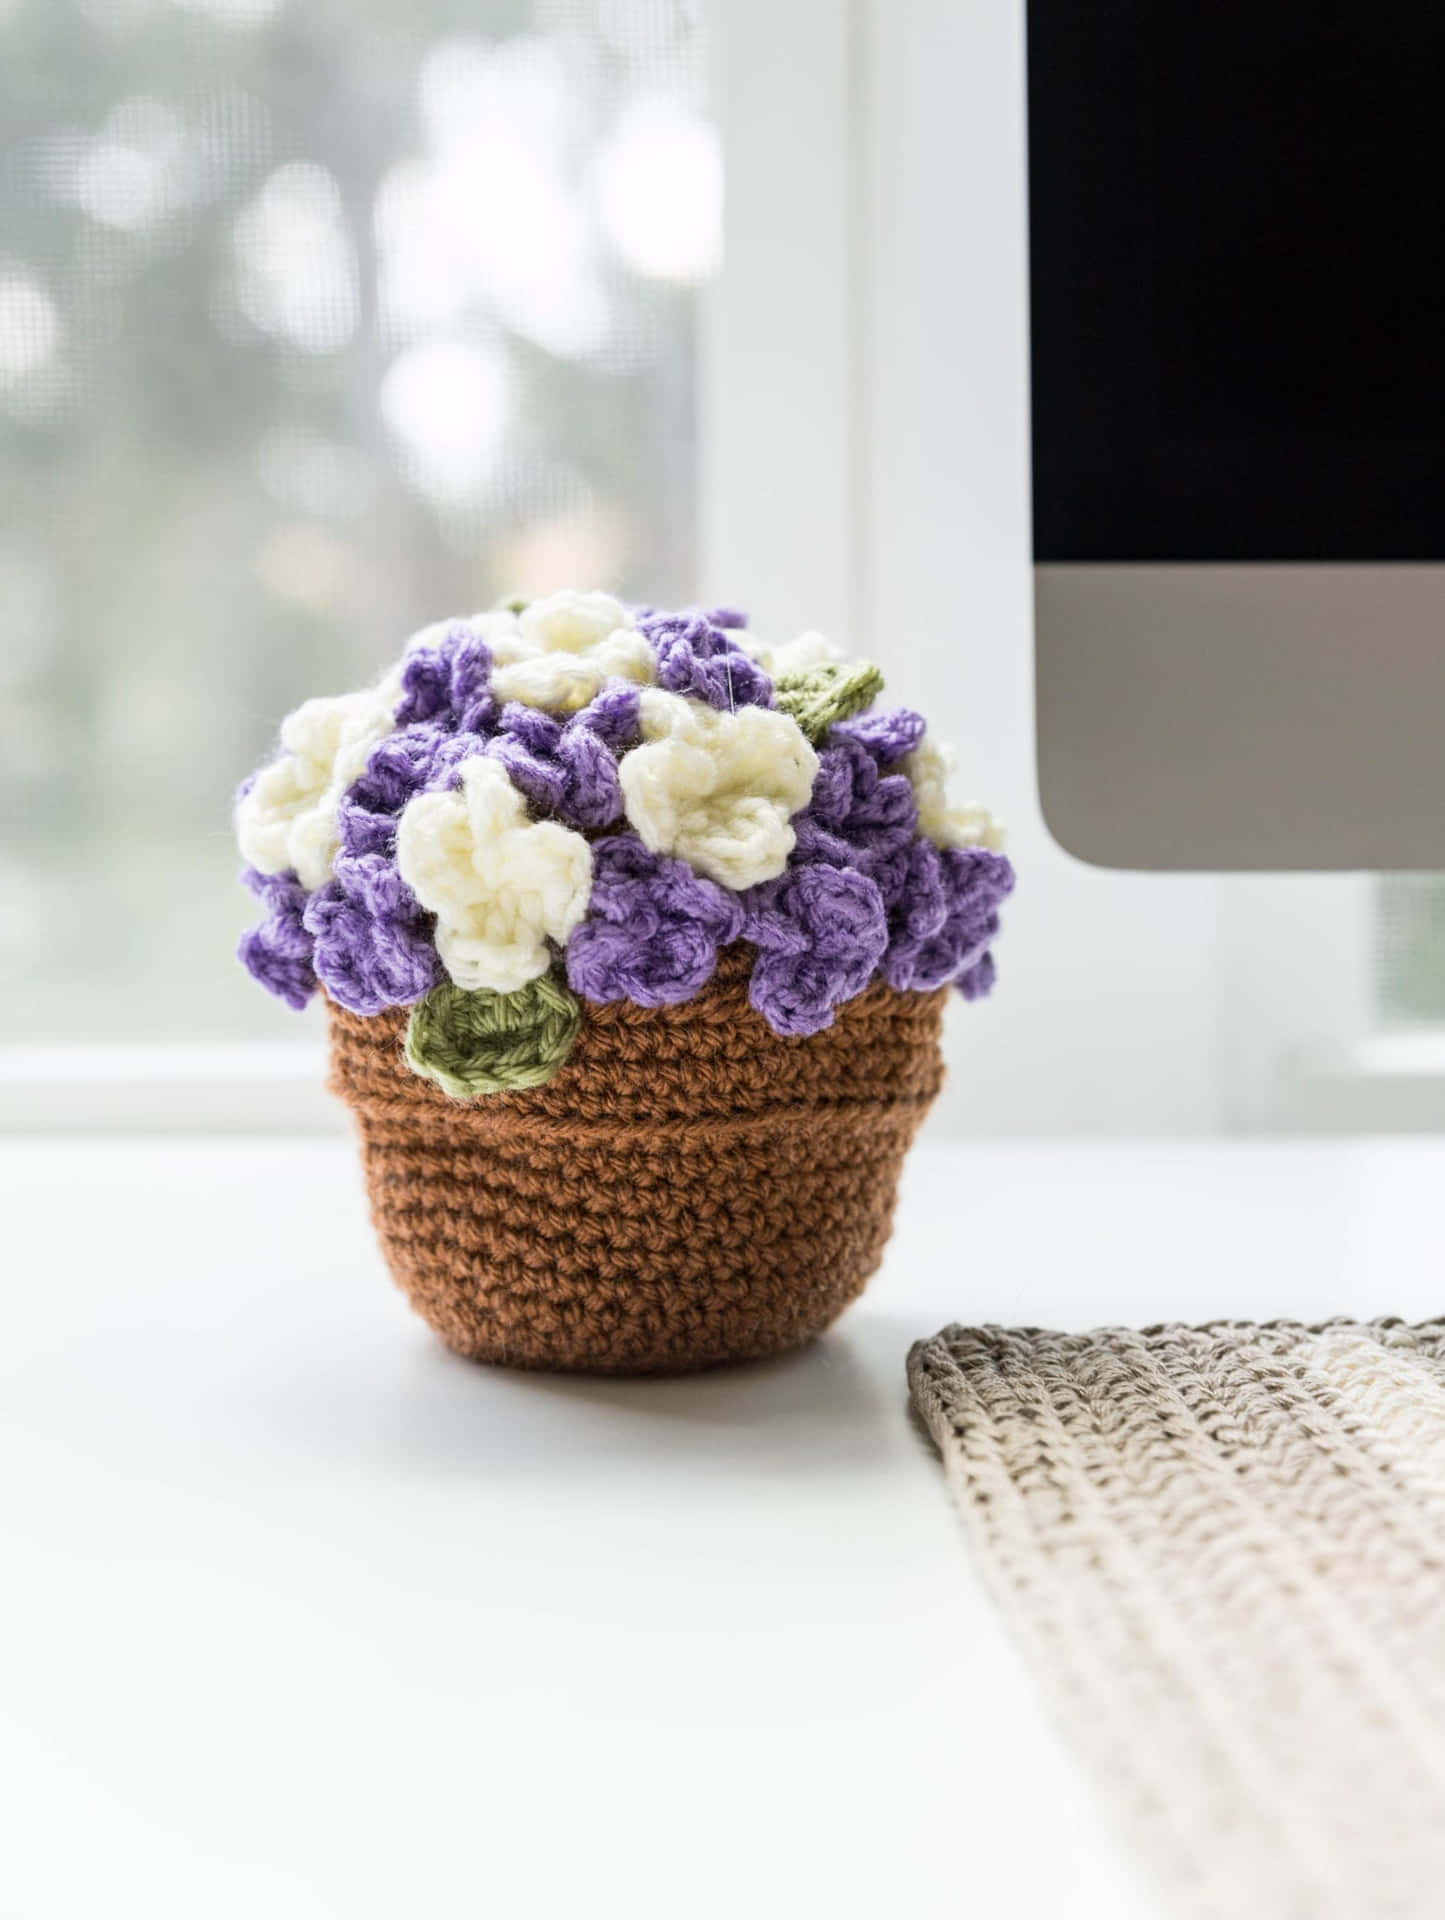 A Crocheted Flower Pot Sitting On A Desk